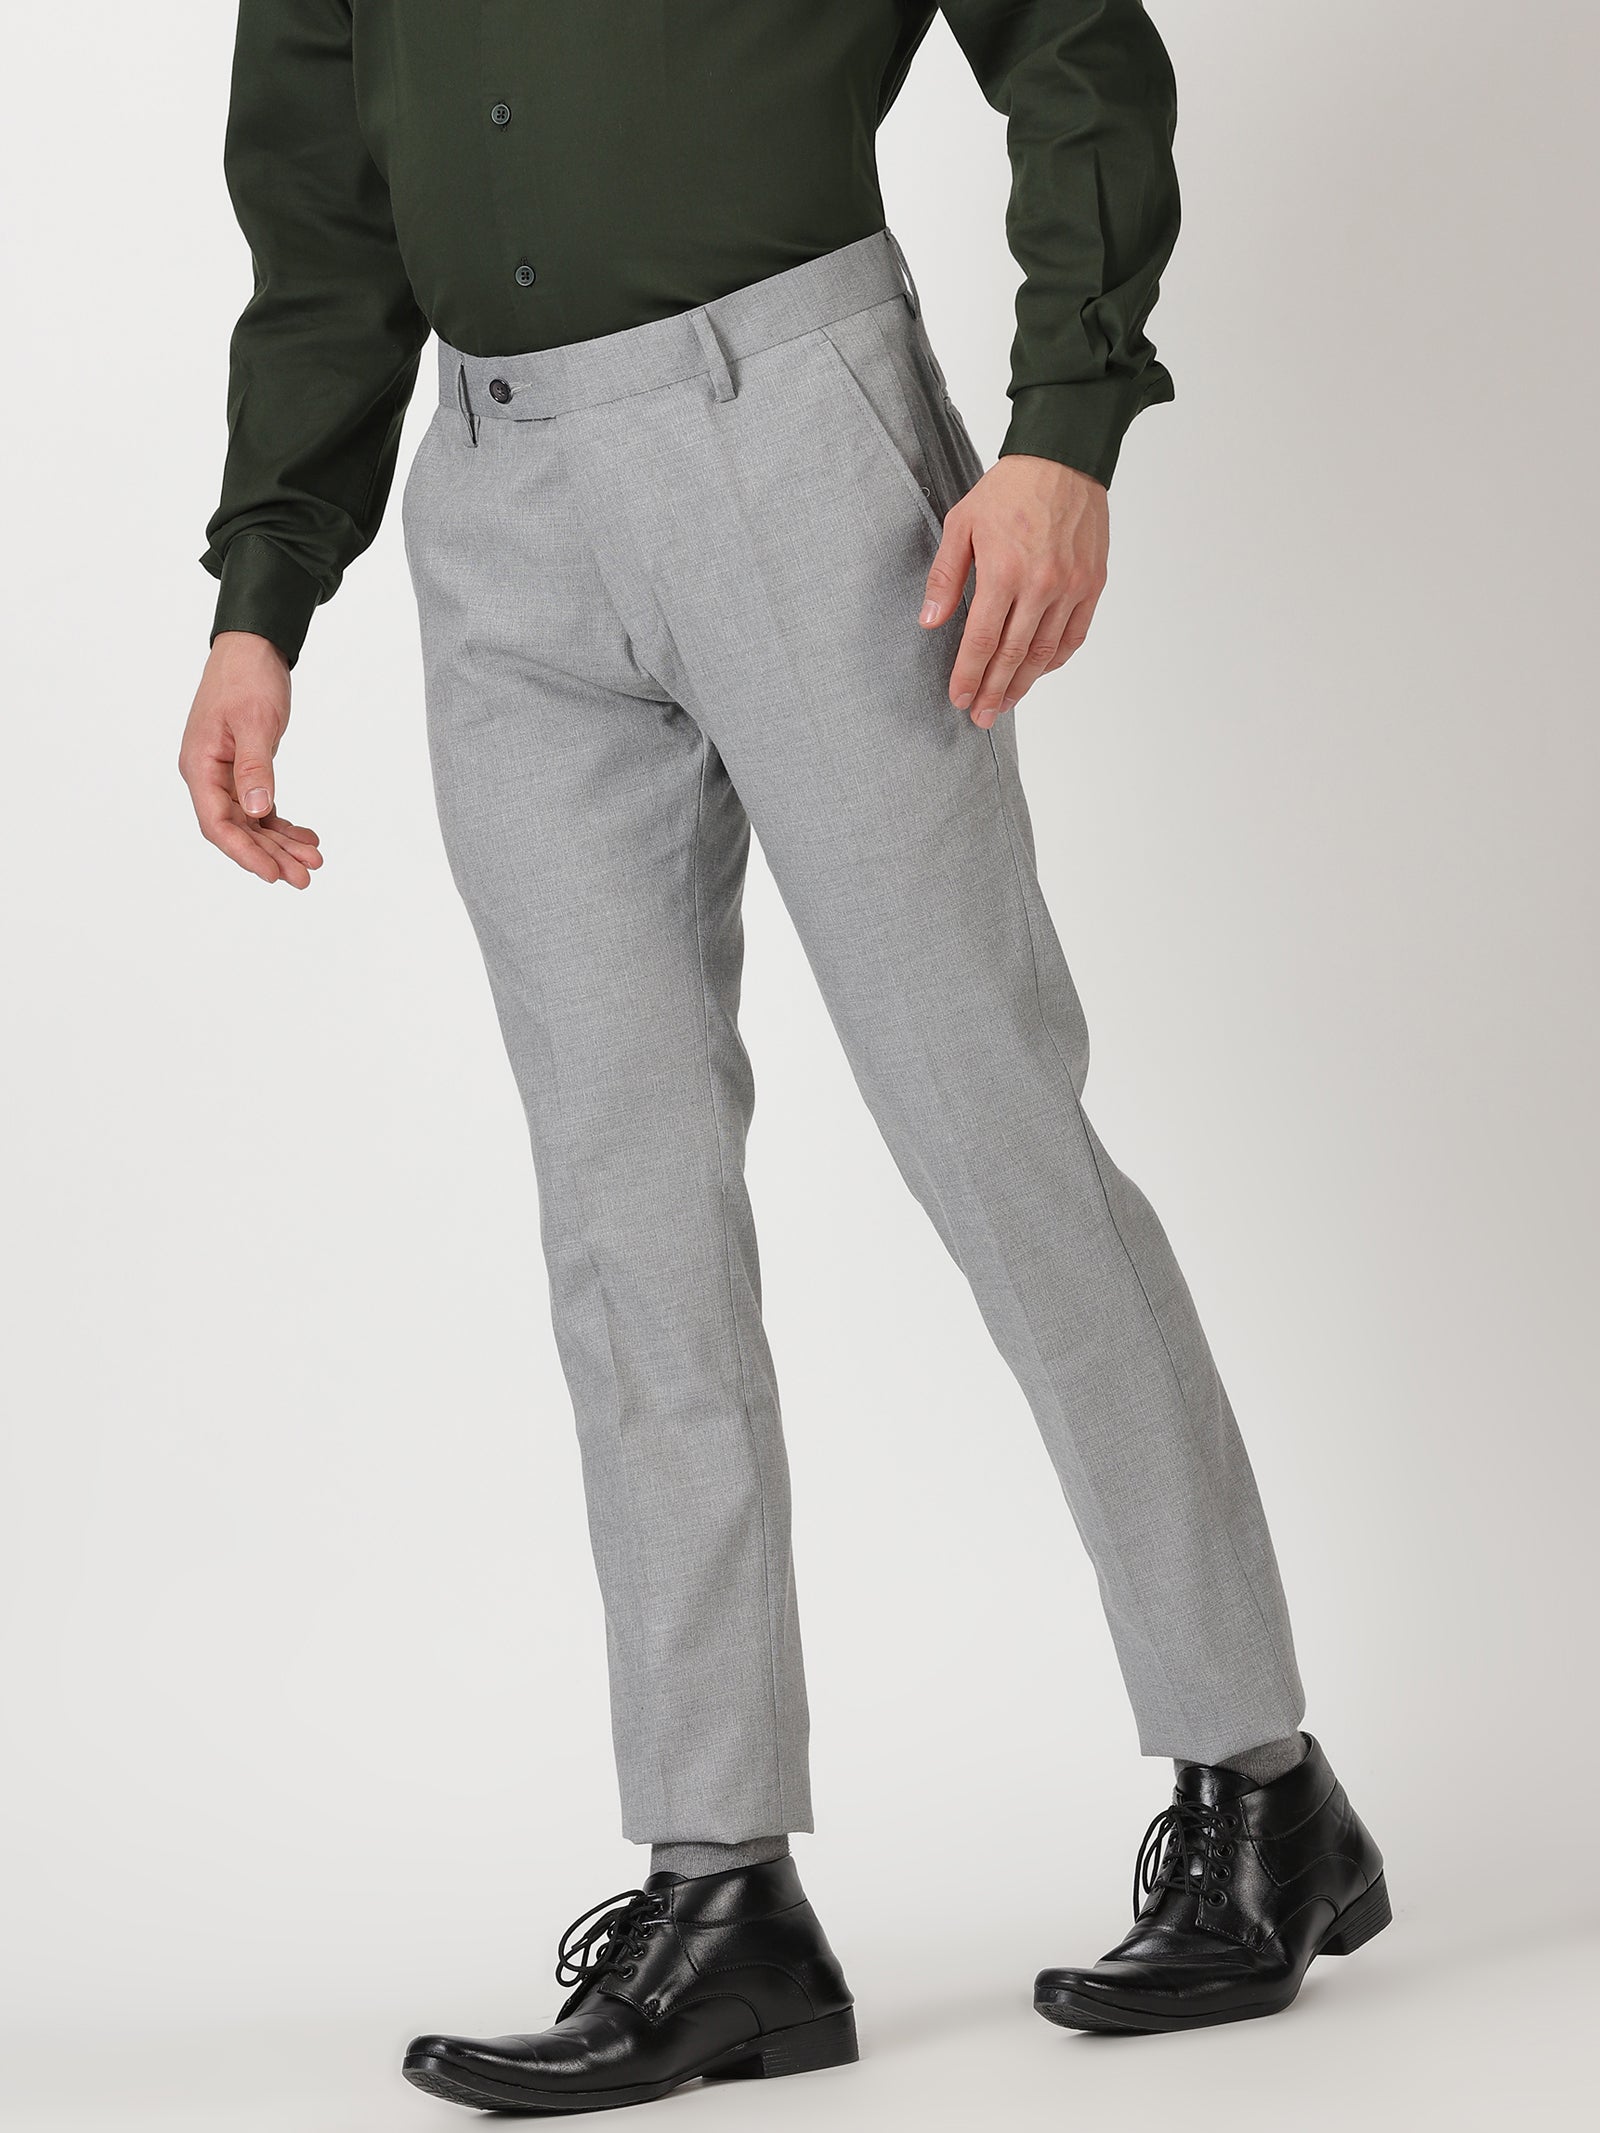 Xysaqa Mens Skinny Plaid Stretch Dress Pants Men Casual Slack Pants  Slim-Fit Tapered Trousers S-3XL - Walmart.com